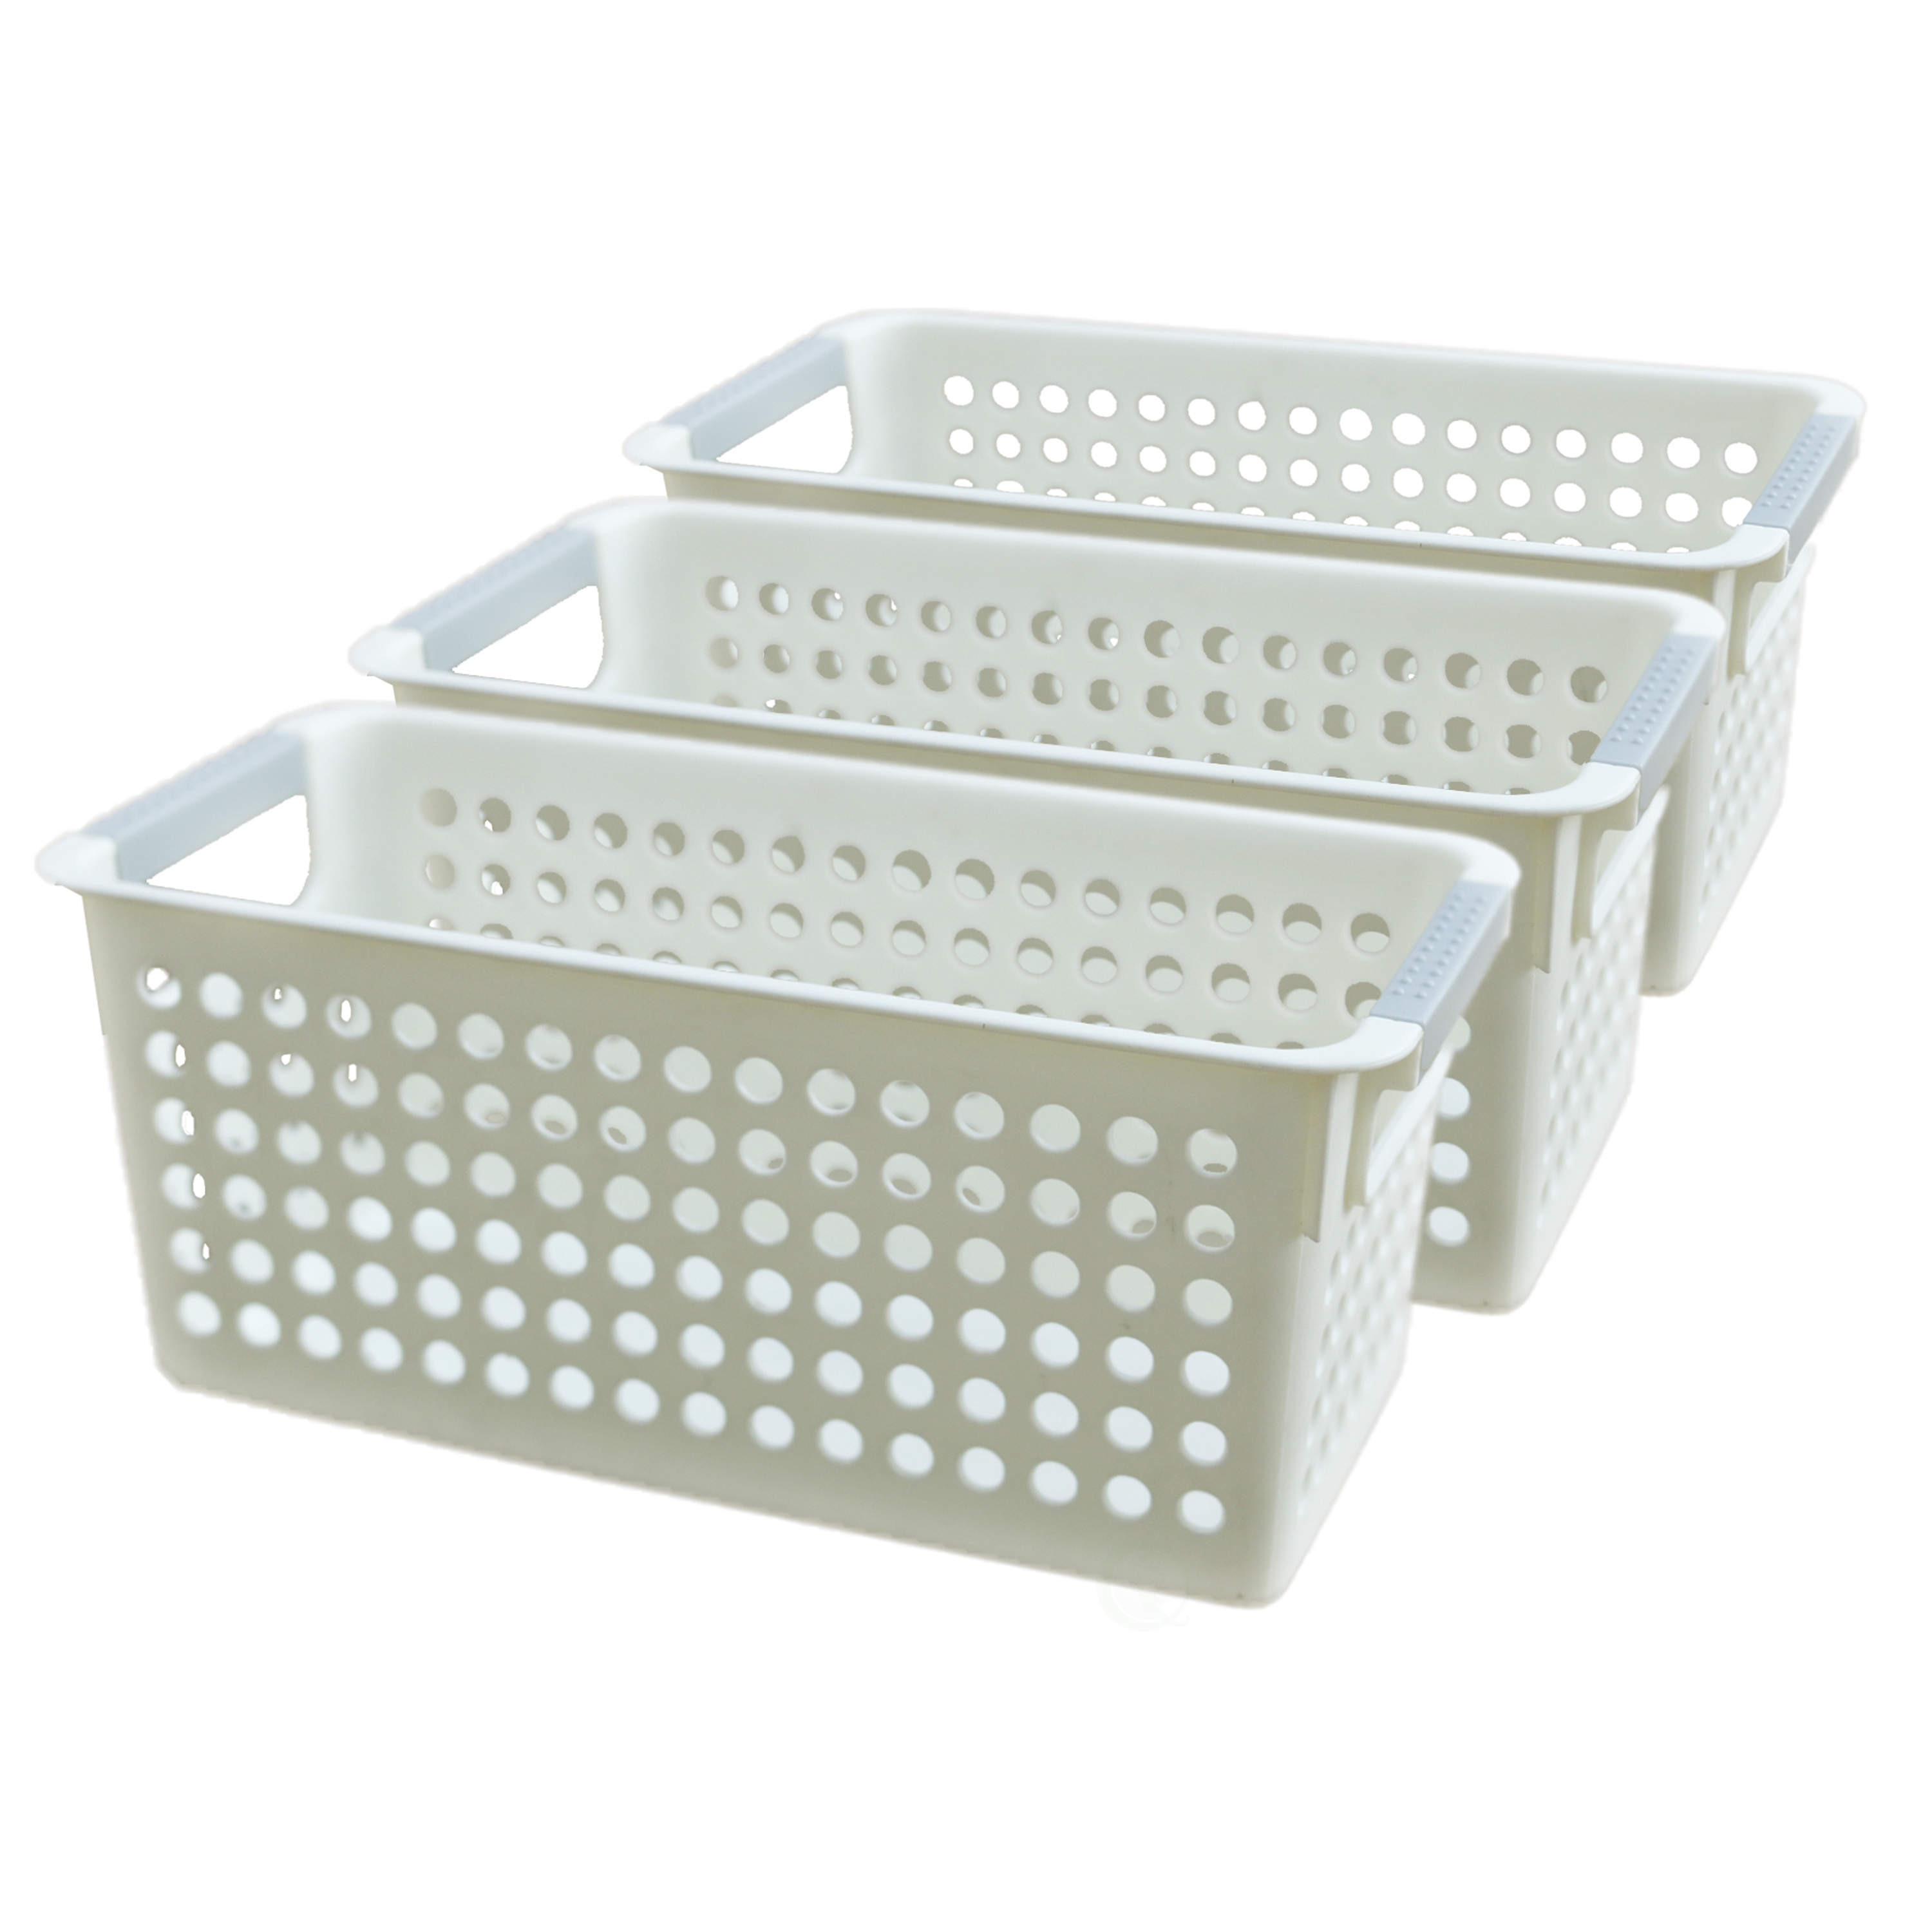 White Rectangular Plastic Shelf Organizer Basket With Handles - Set Of 3 Large